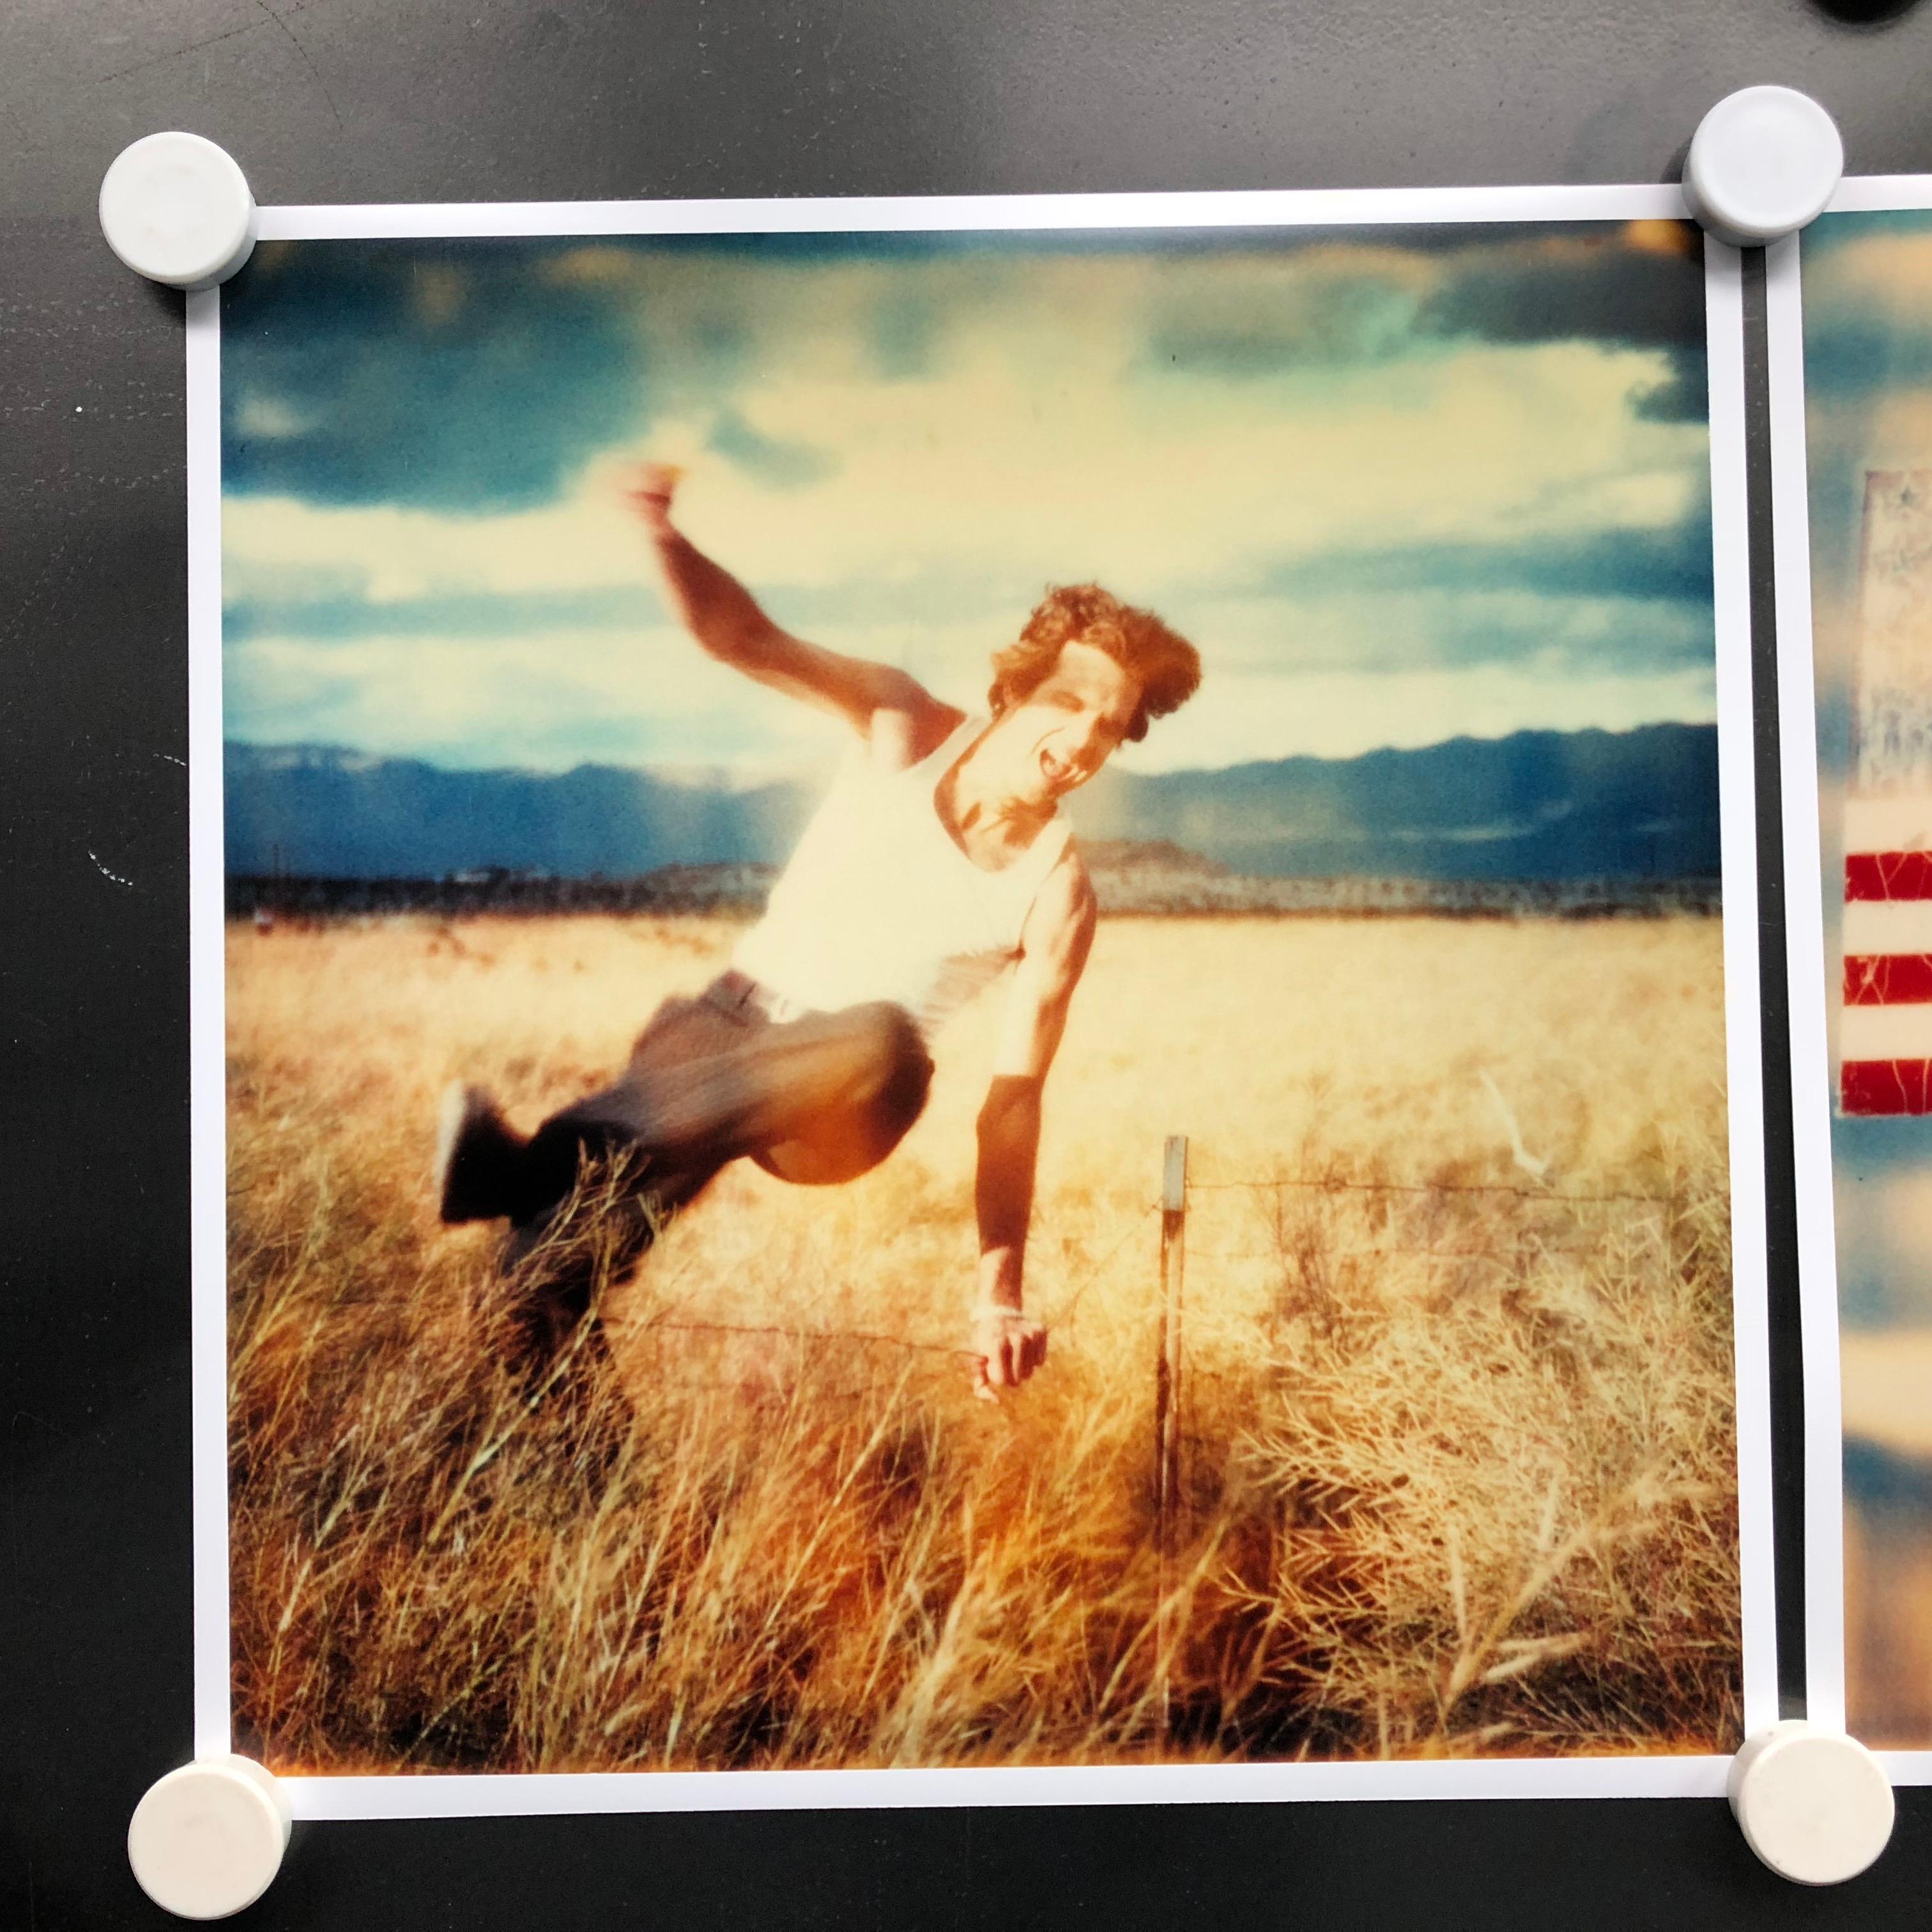 Field of Dreams (Sidewinder), analog- Polaroid, Contemporary, 21st Century